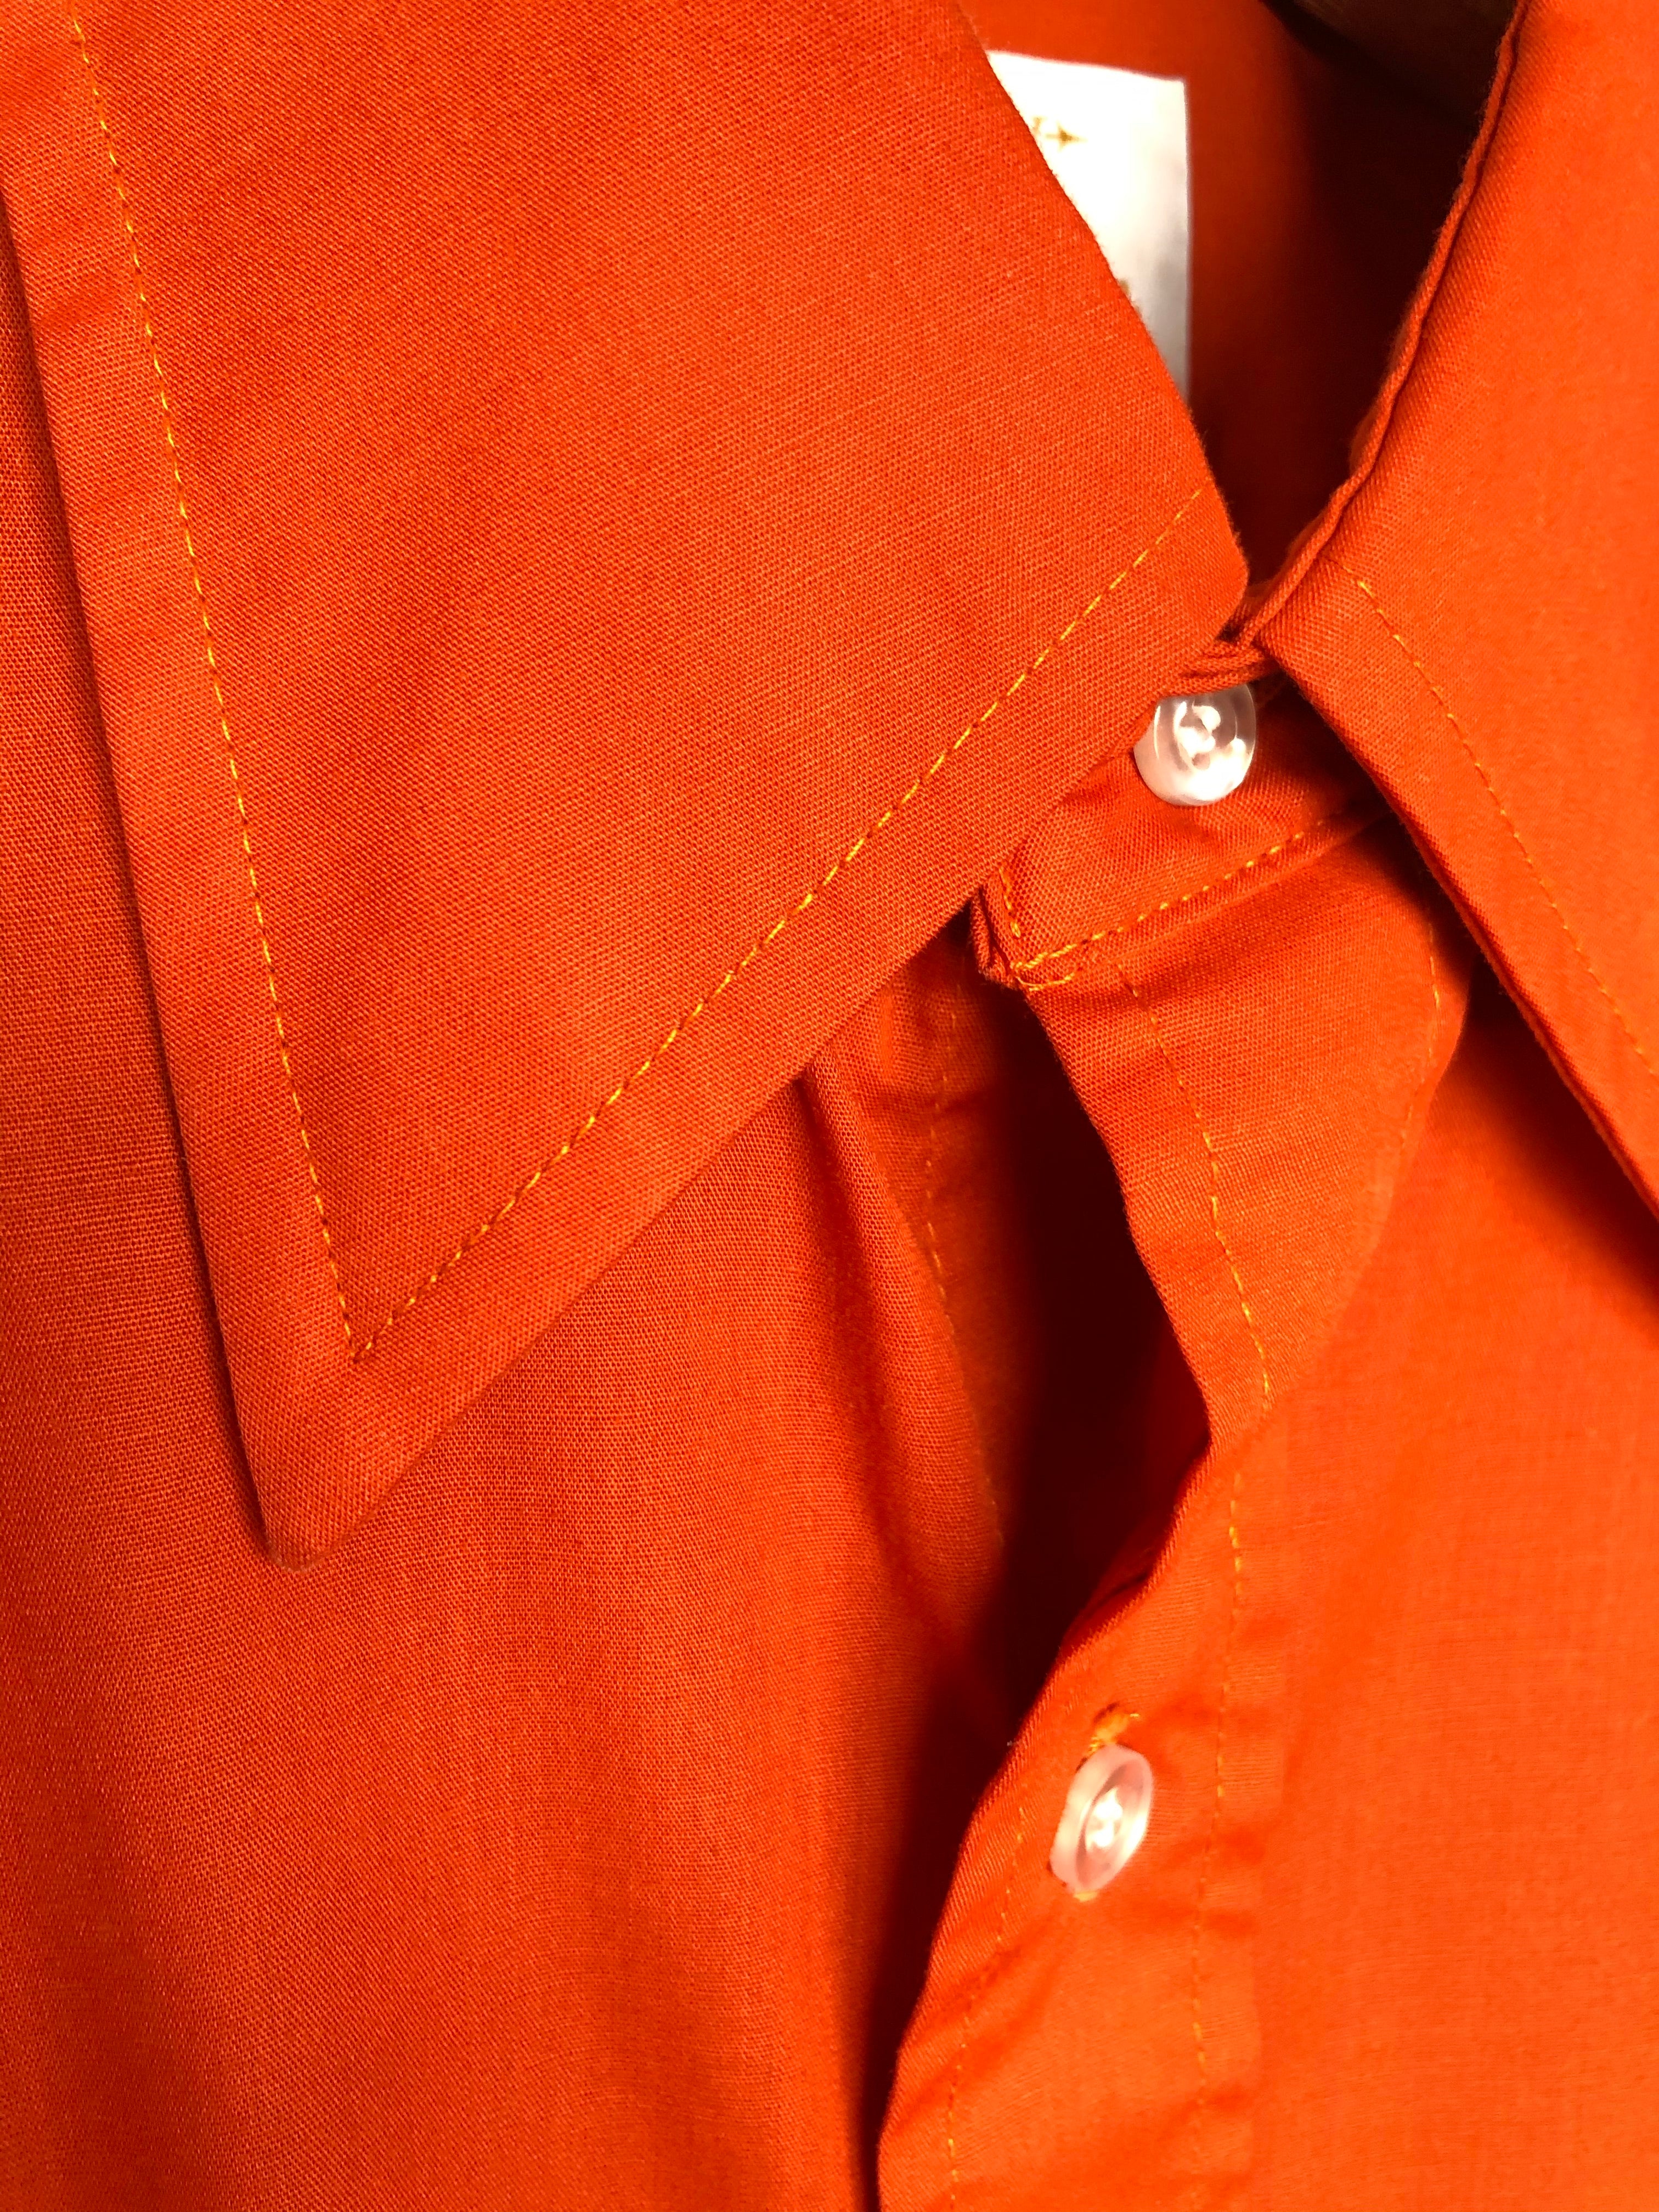 70’s Arrow by Kent Poly Cotton Dress Shirt Orange